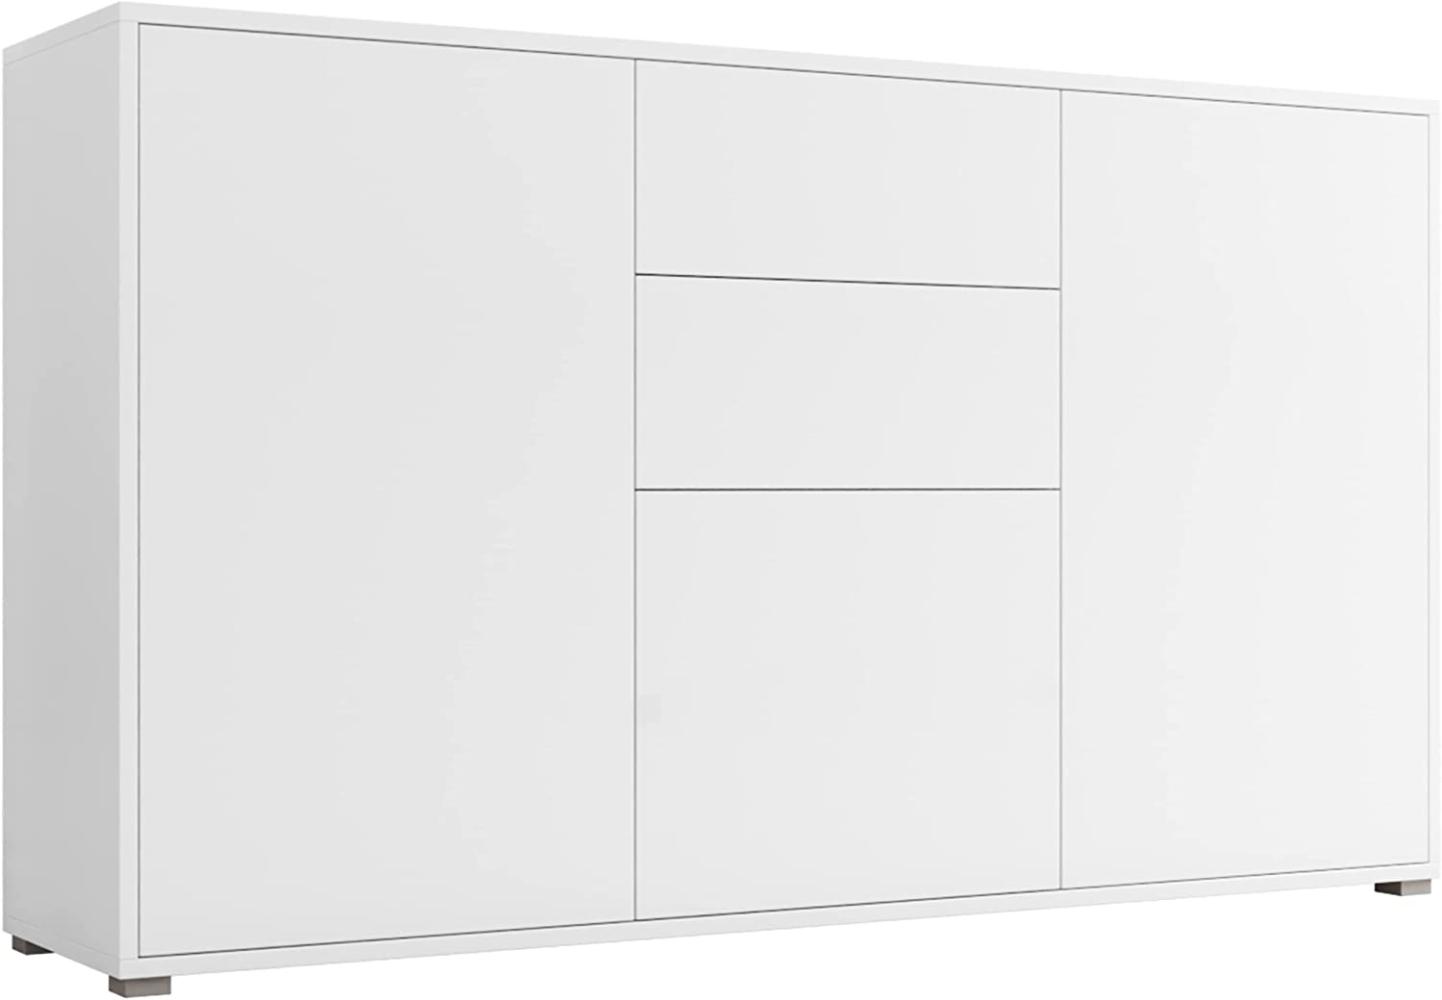 'Gesita K1D4SZ' Kommode, Weiß, 93 x 141 cm Bild 1